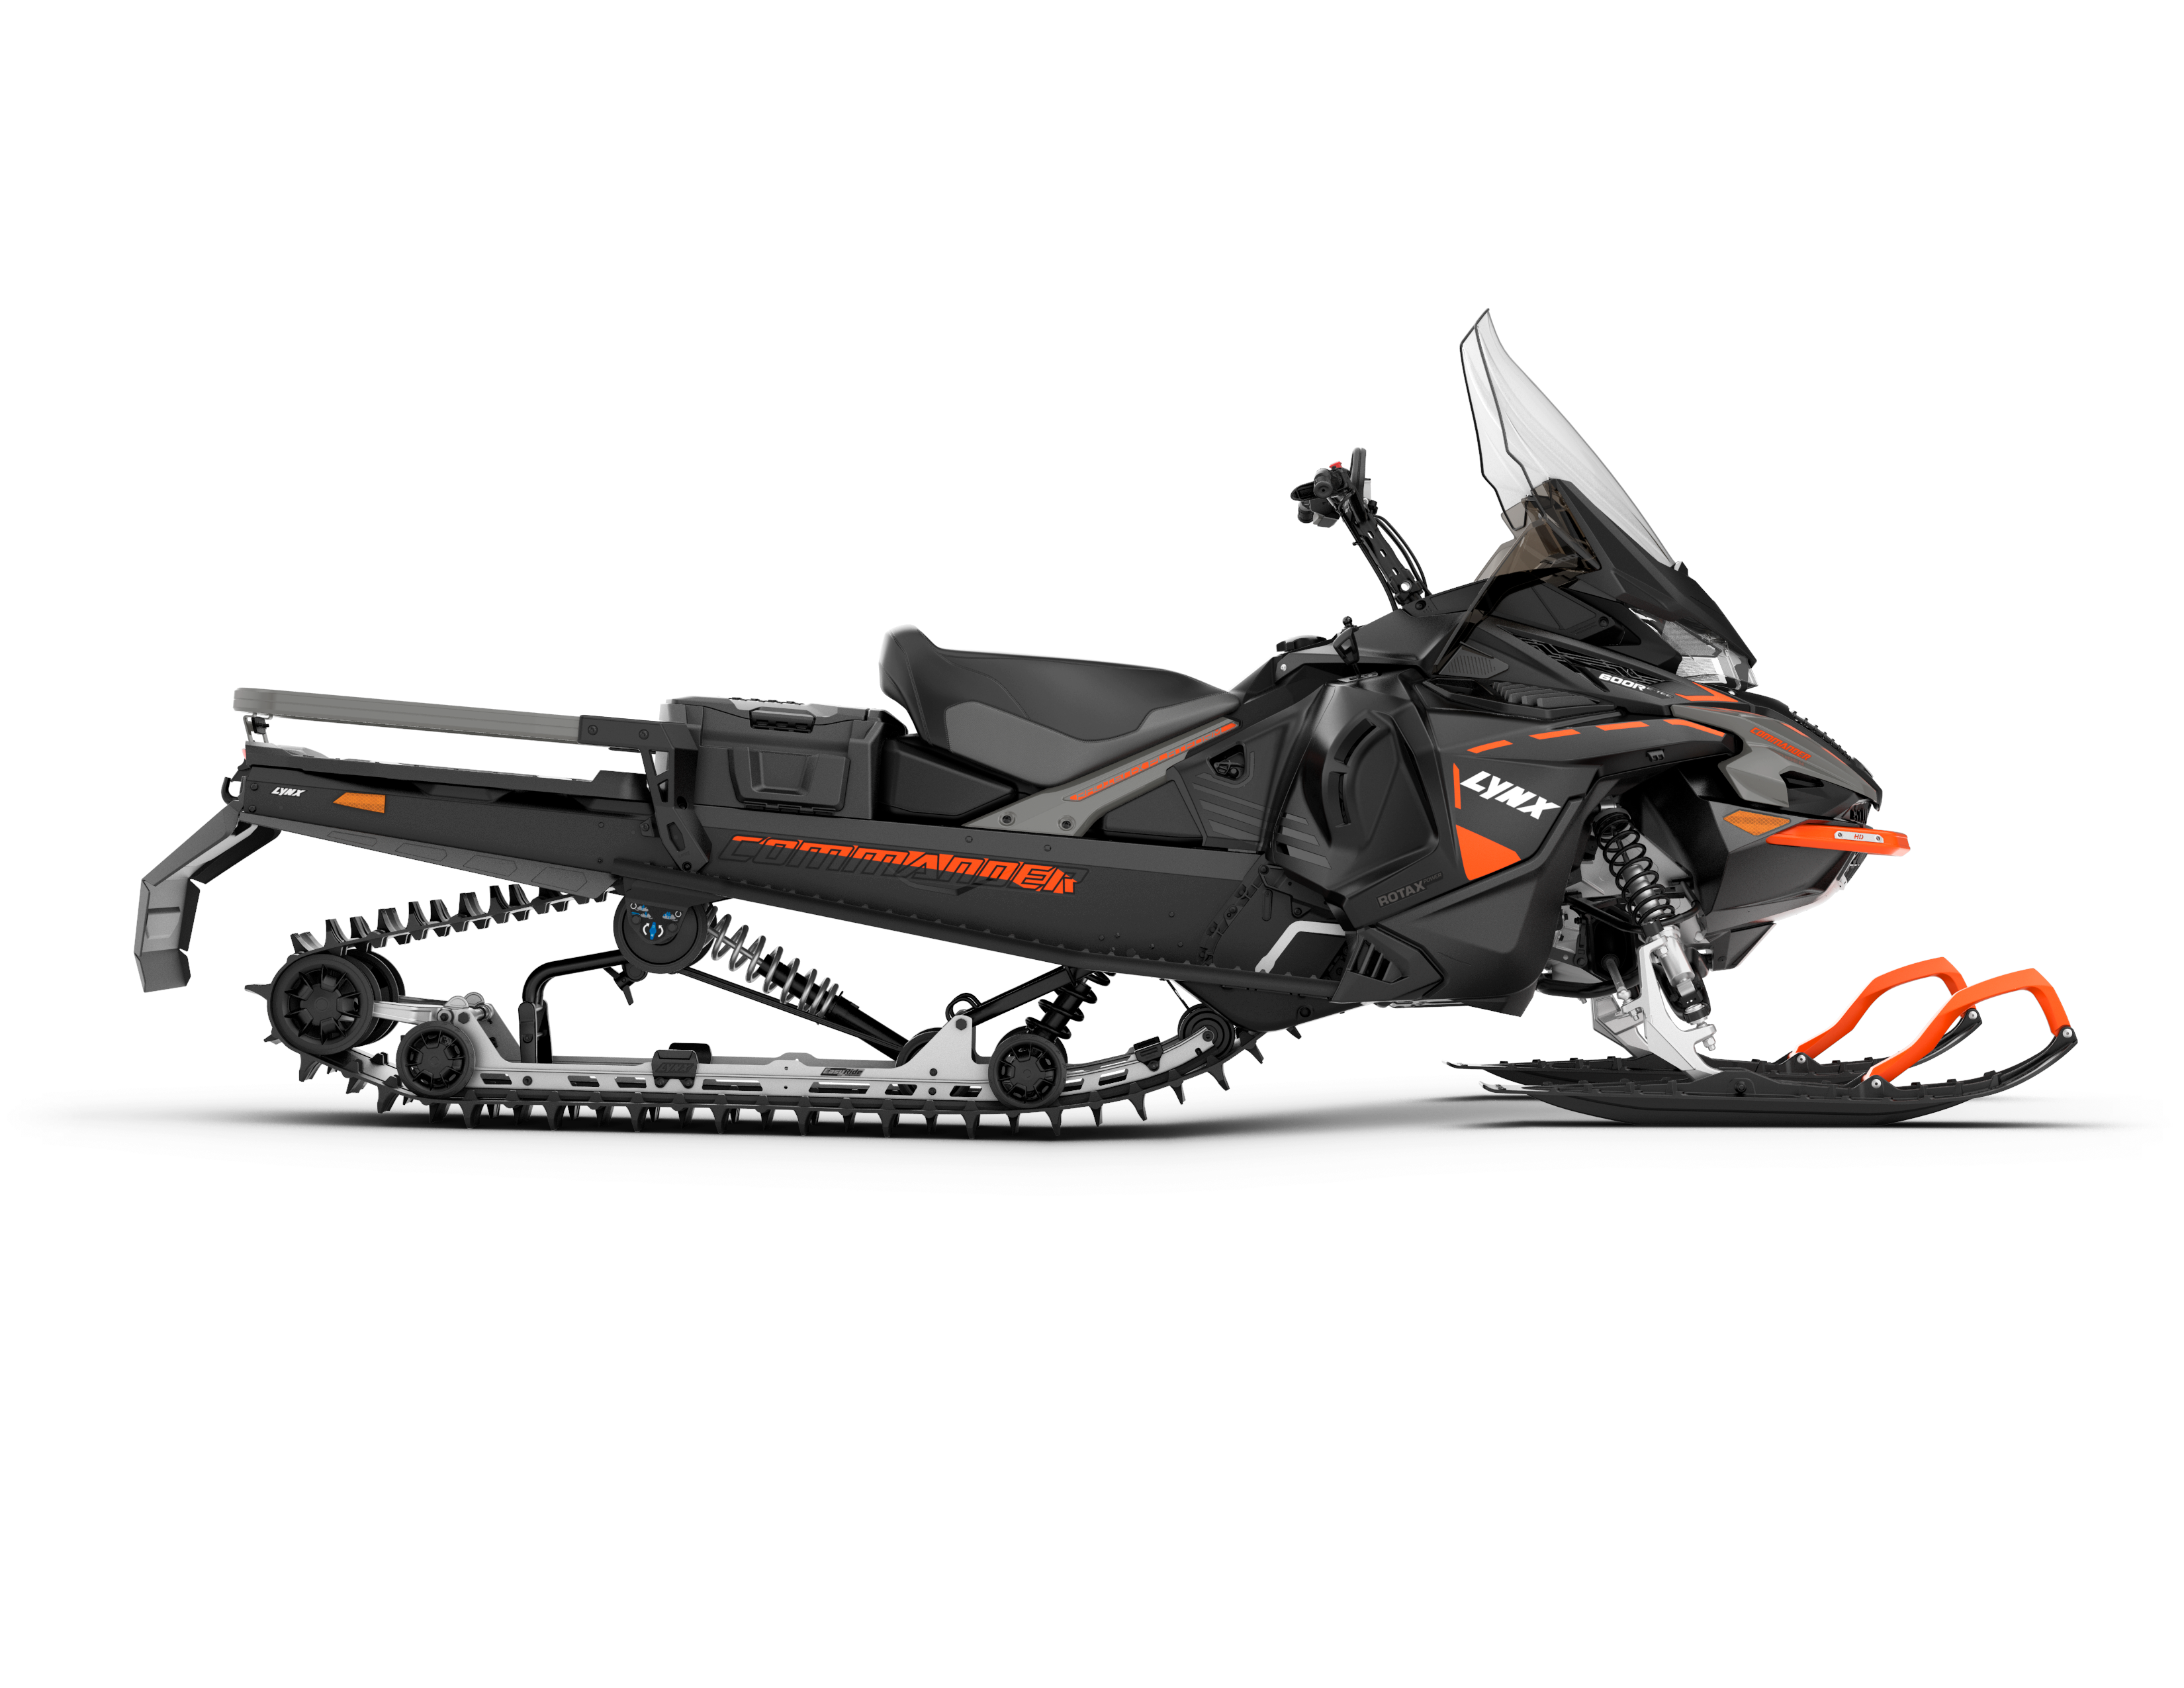 2021 best-selling snowmobile models in Europe - Lynx Snowmobiles